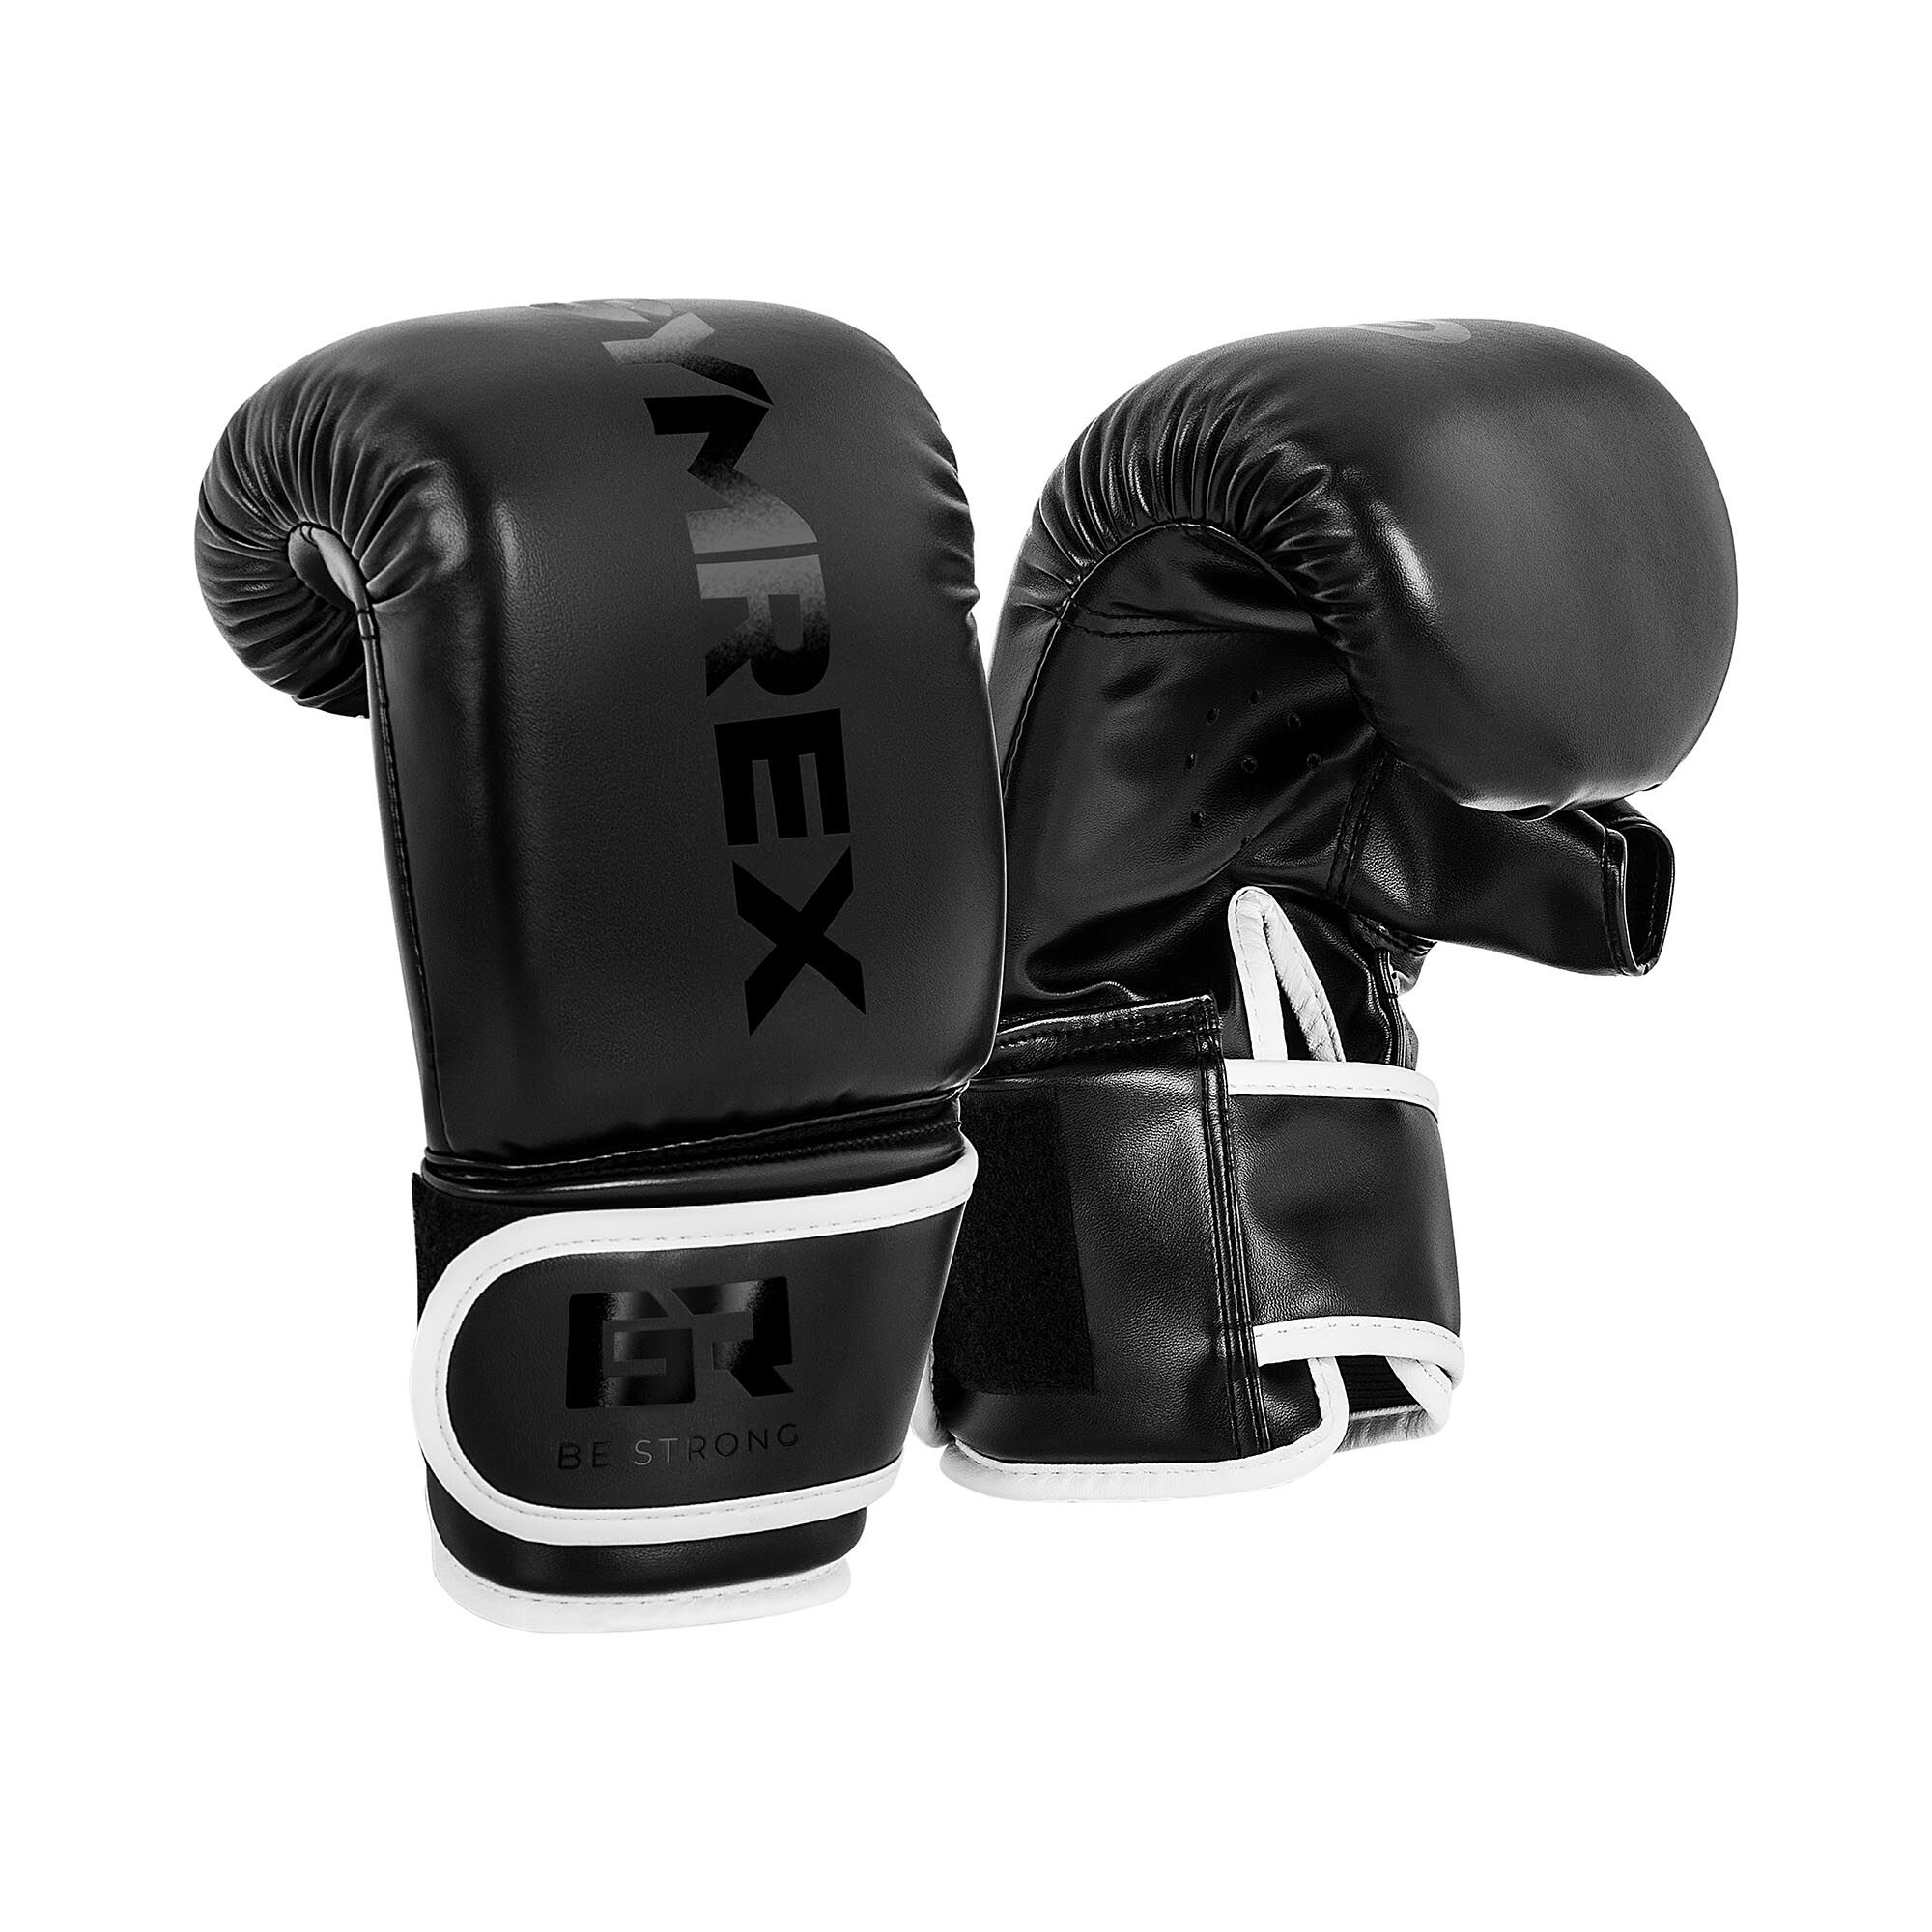 Gymrex Boxing Bag Gloves - 10 oz - black GR-BG 10PB